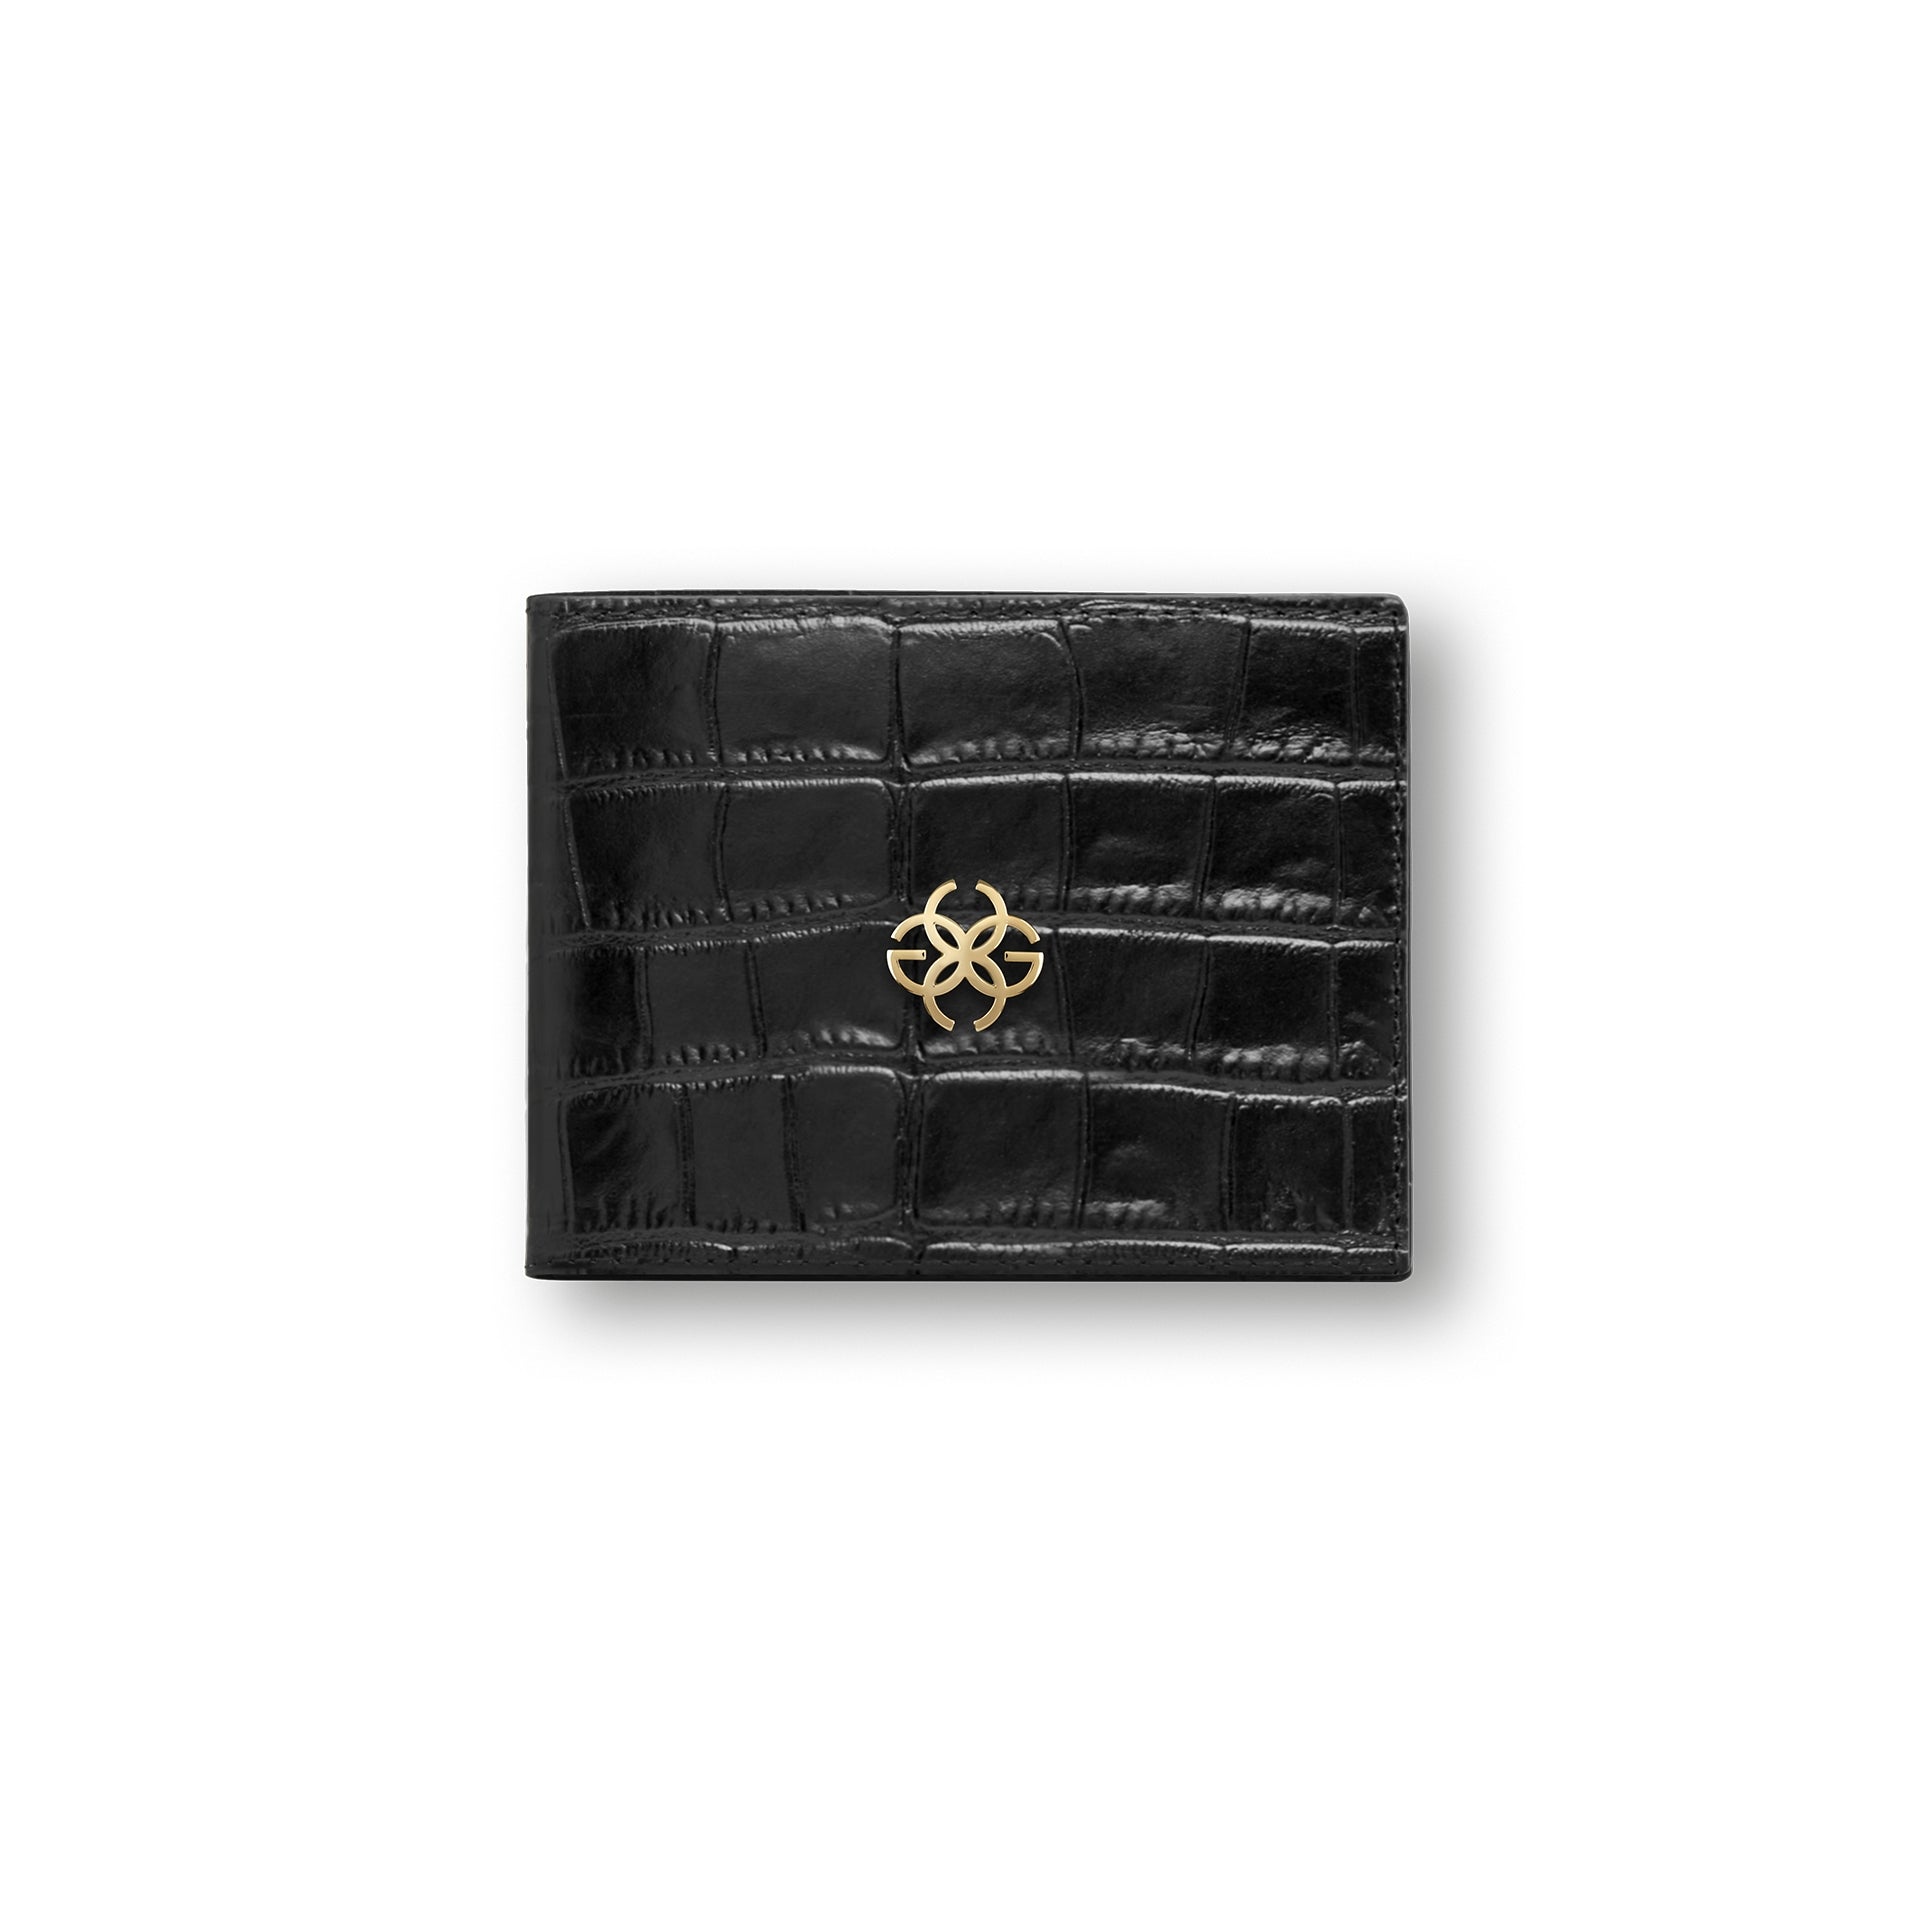 Golden Concept - Leather Accessories - Wallet (Croco Embossed)